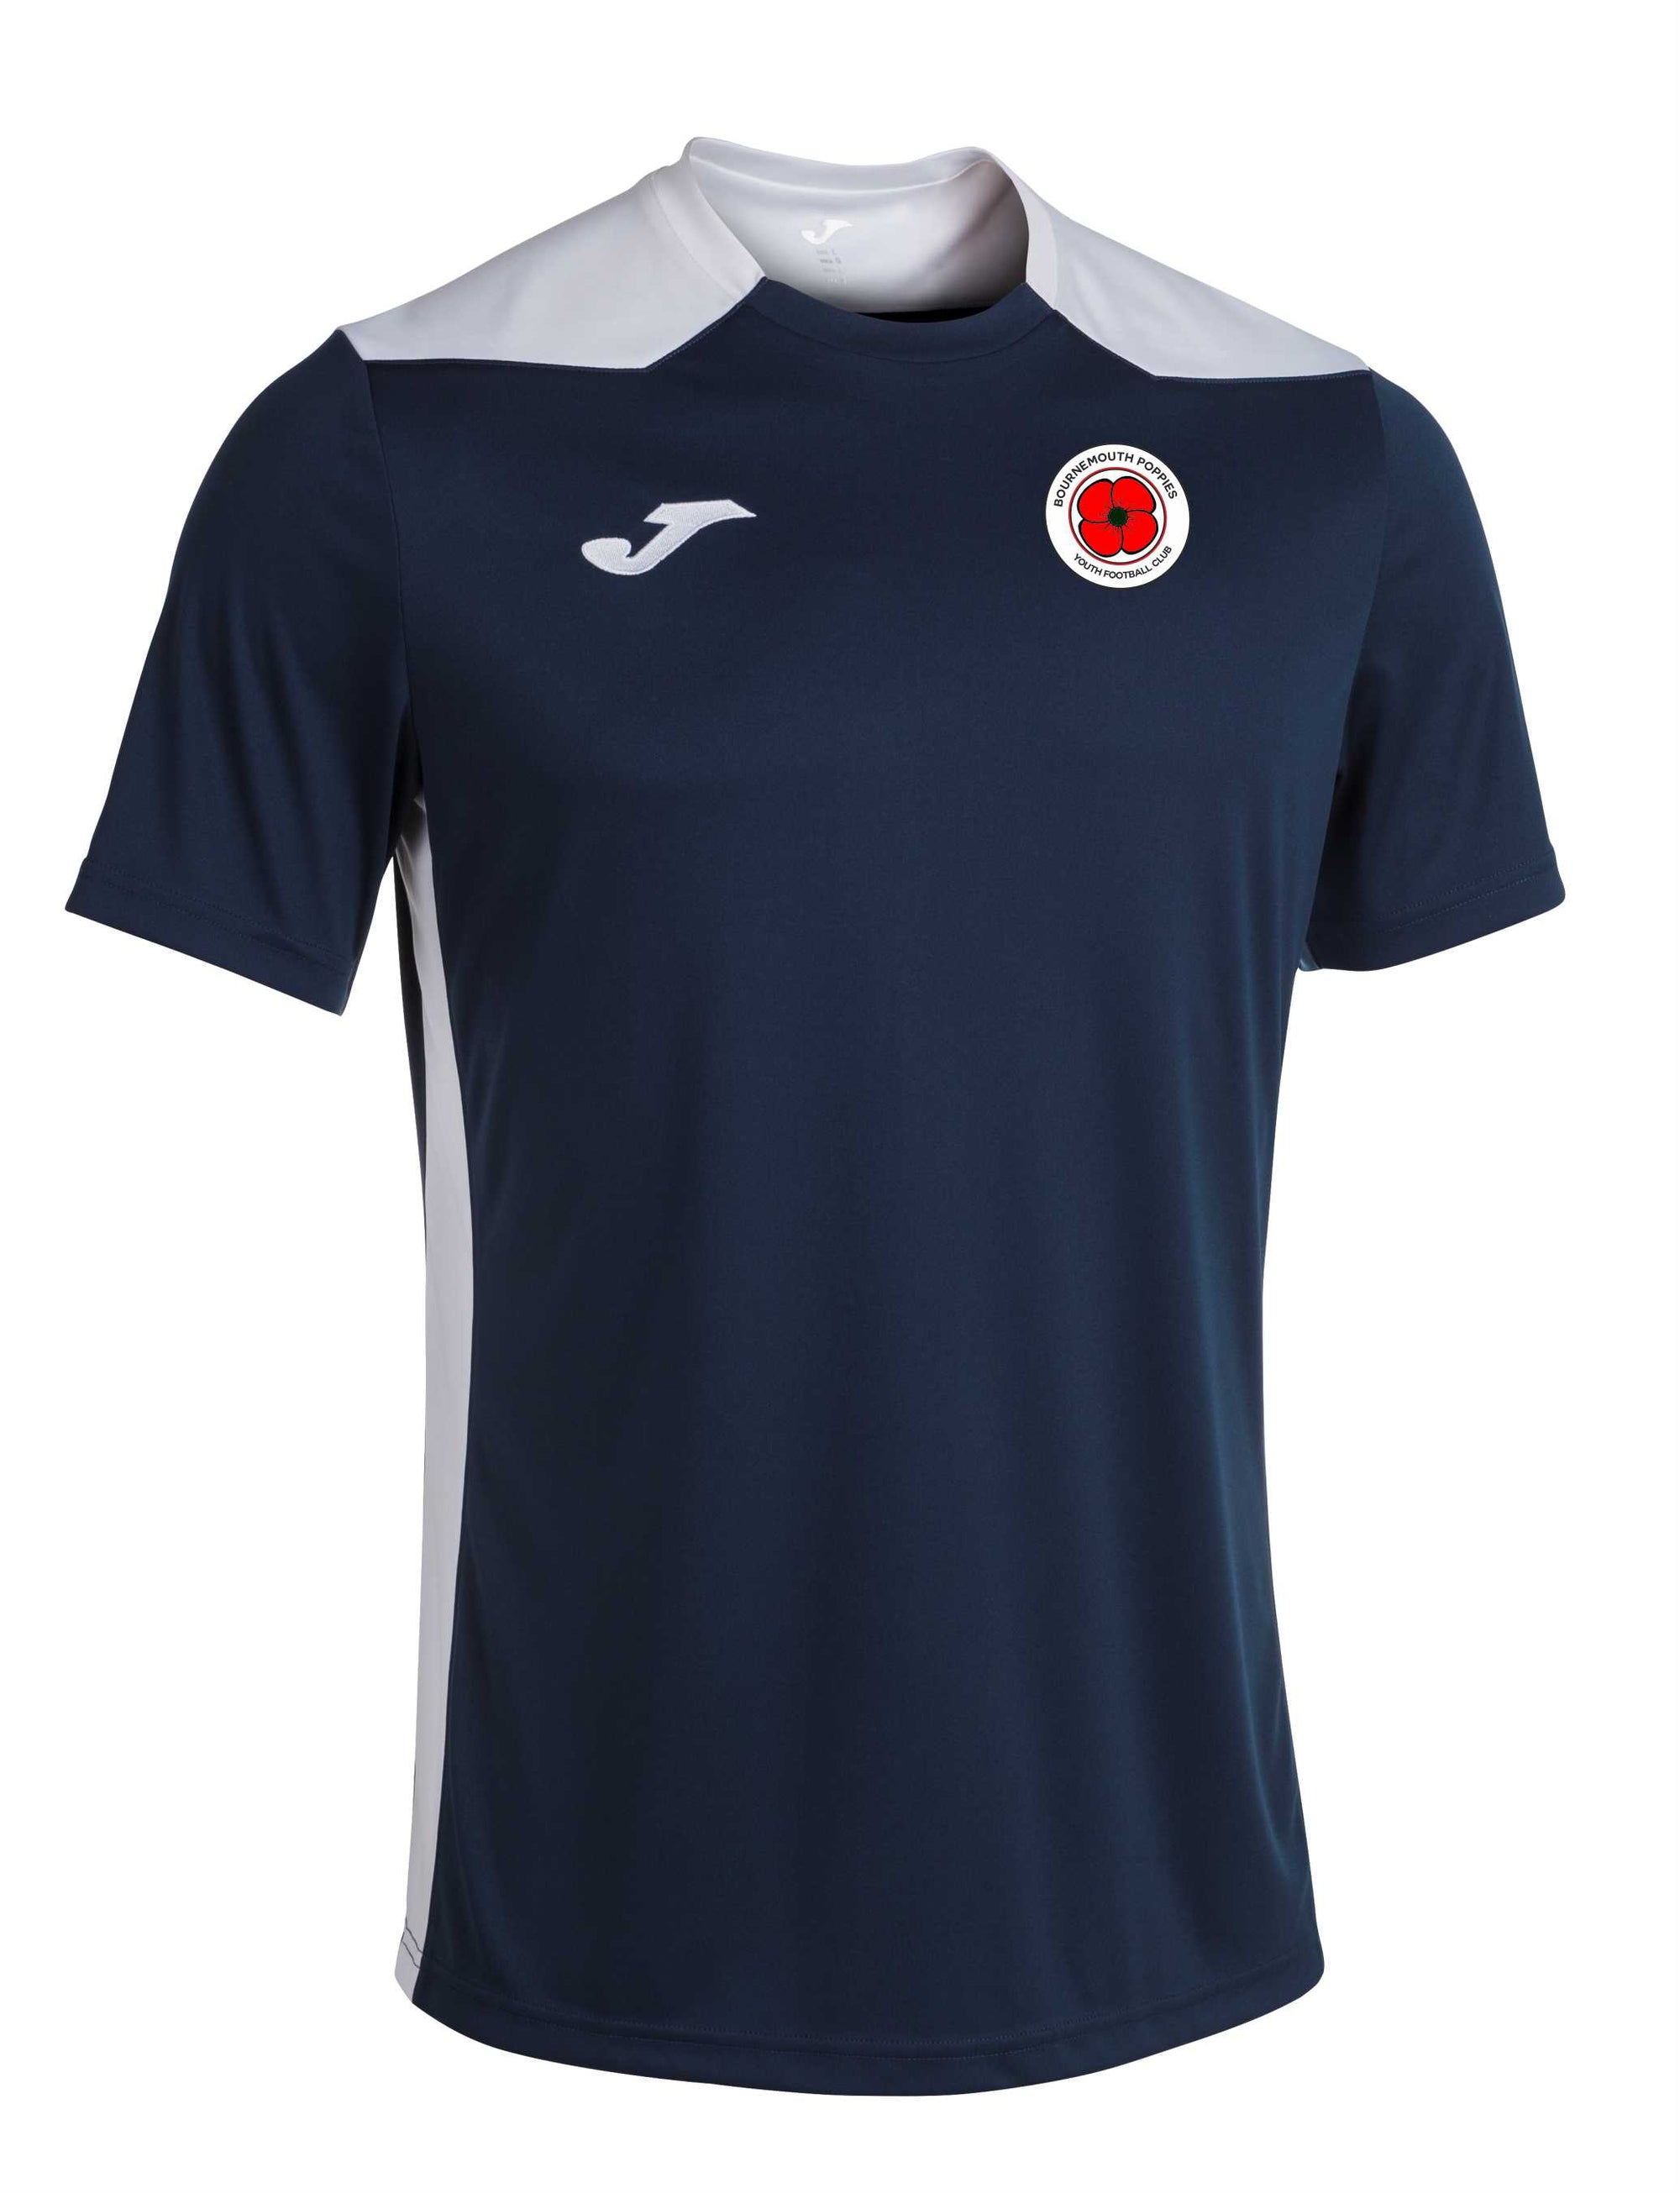 Poppies Management - Joma Championship VI Short Sleeved T-Shirt - Dark Navy/White